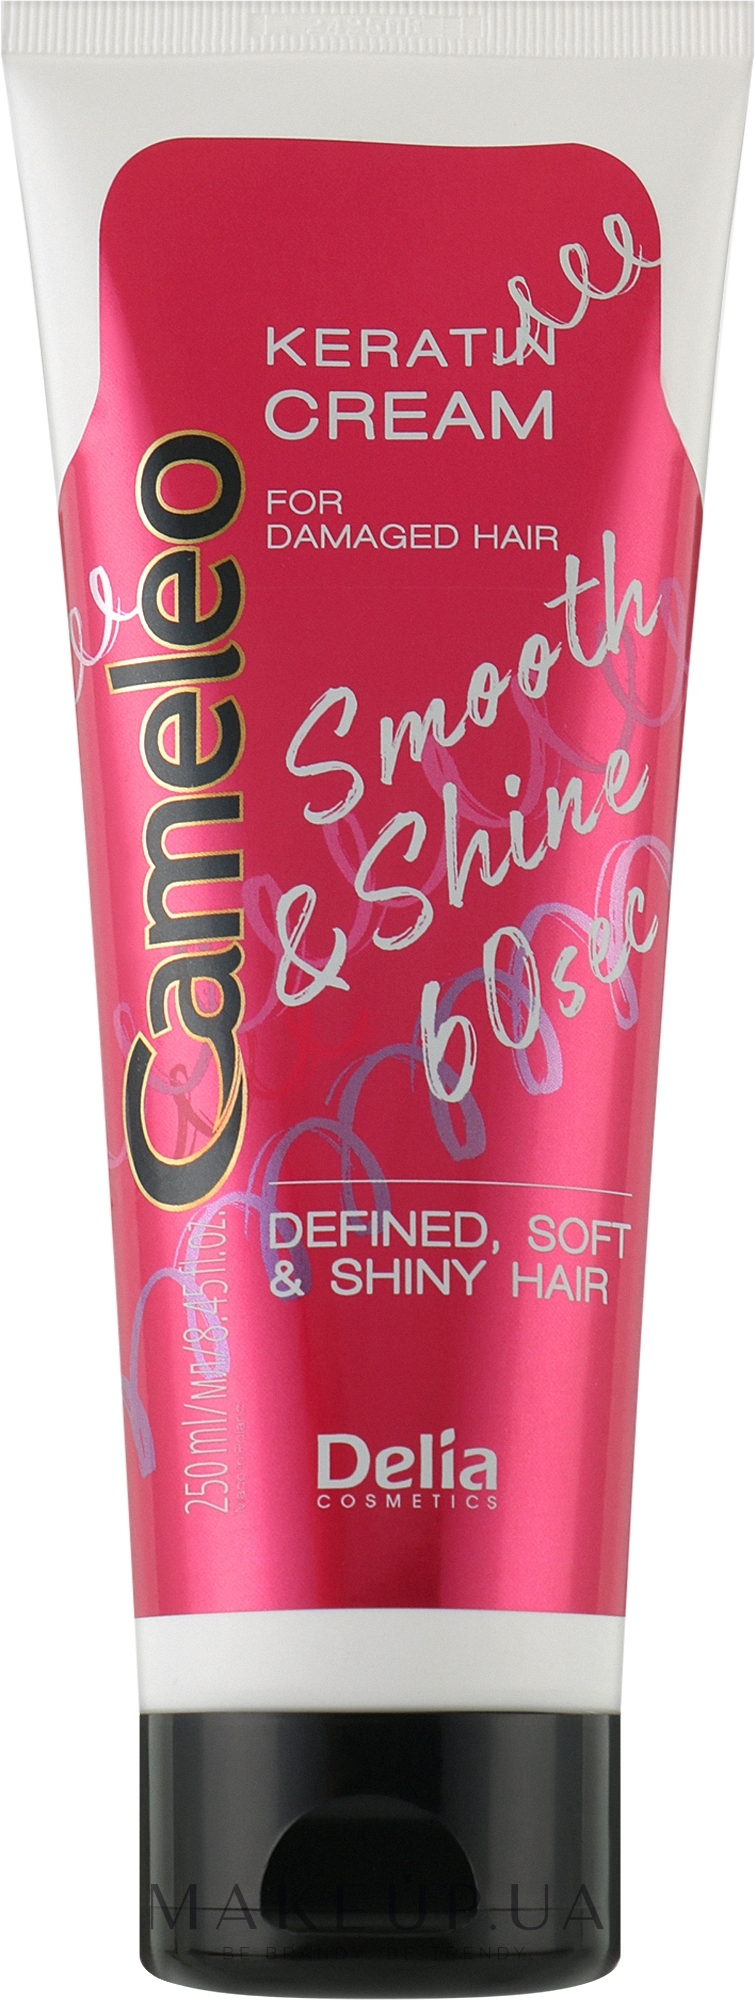 Кератиновий крем для укладки волос - Delia Cosmetics Cameleo Smooth & Shine 60 sec Keratin Cream — фото 250ml